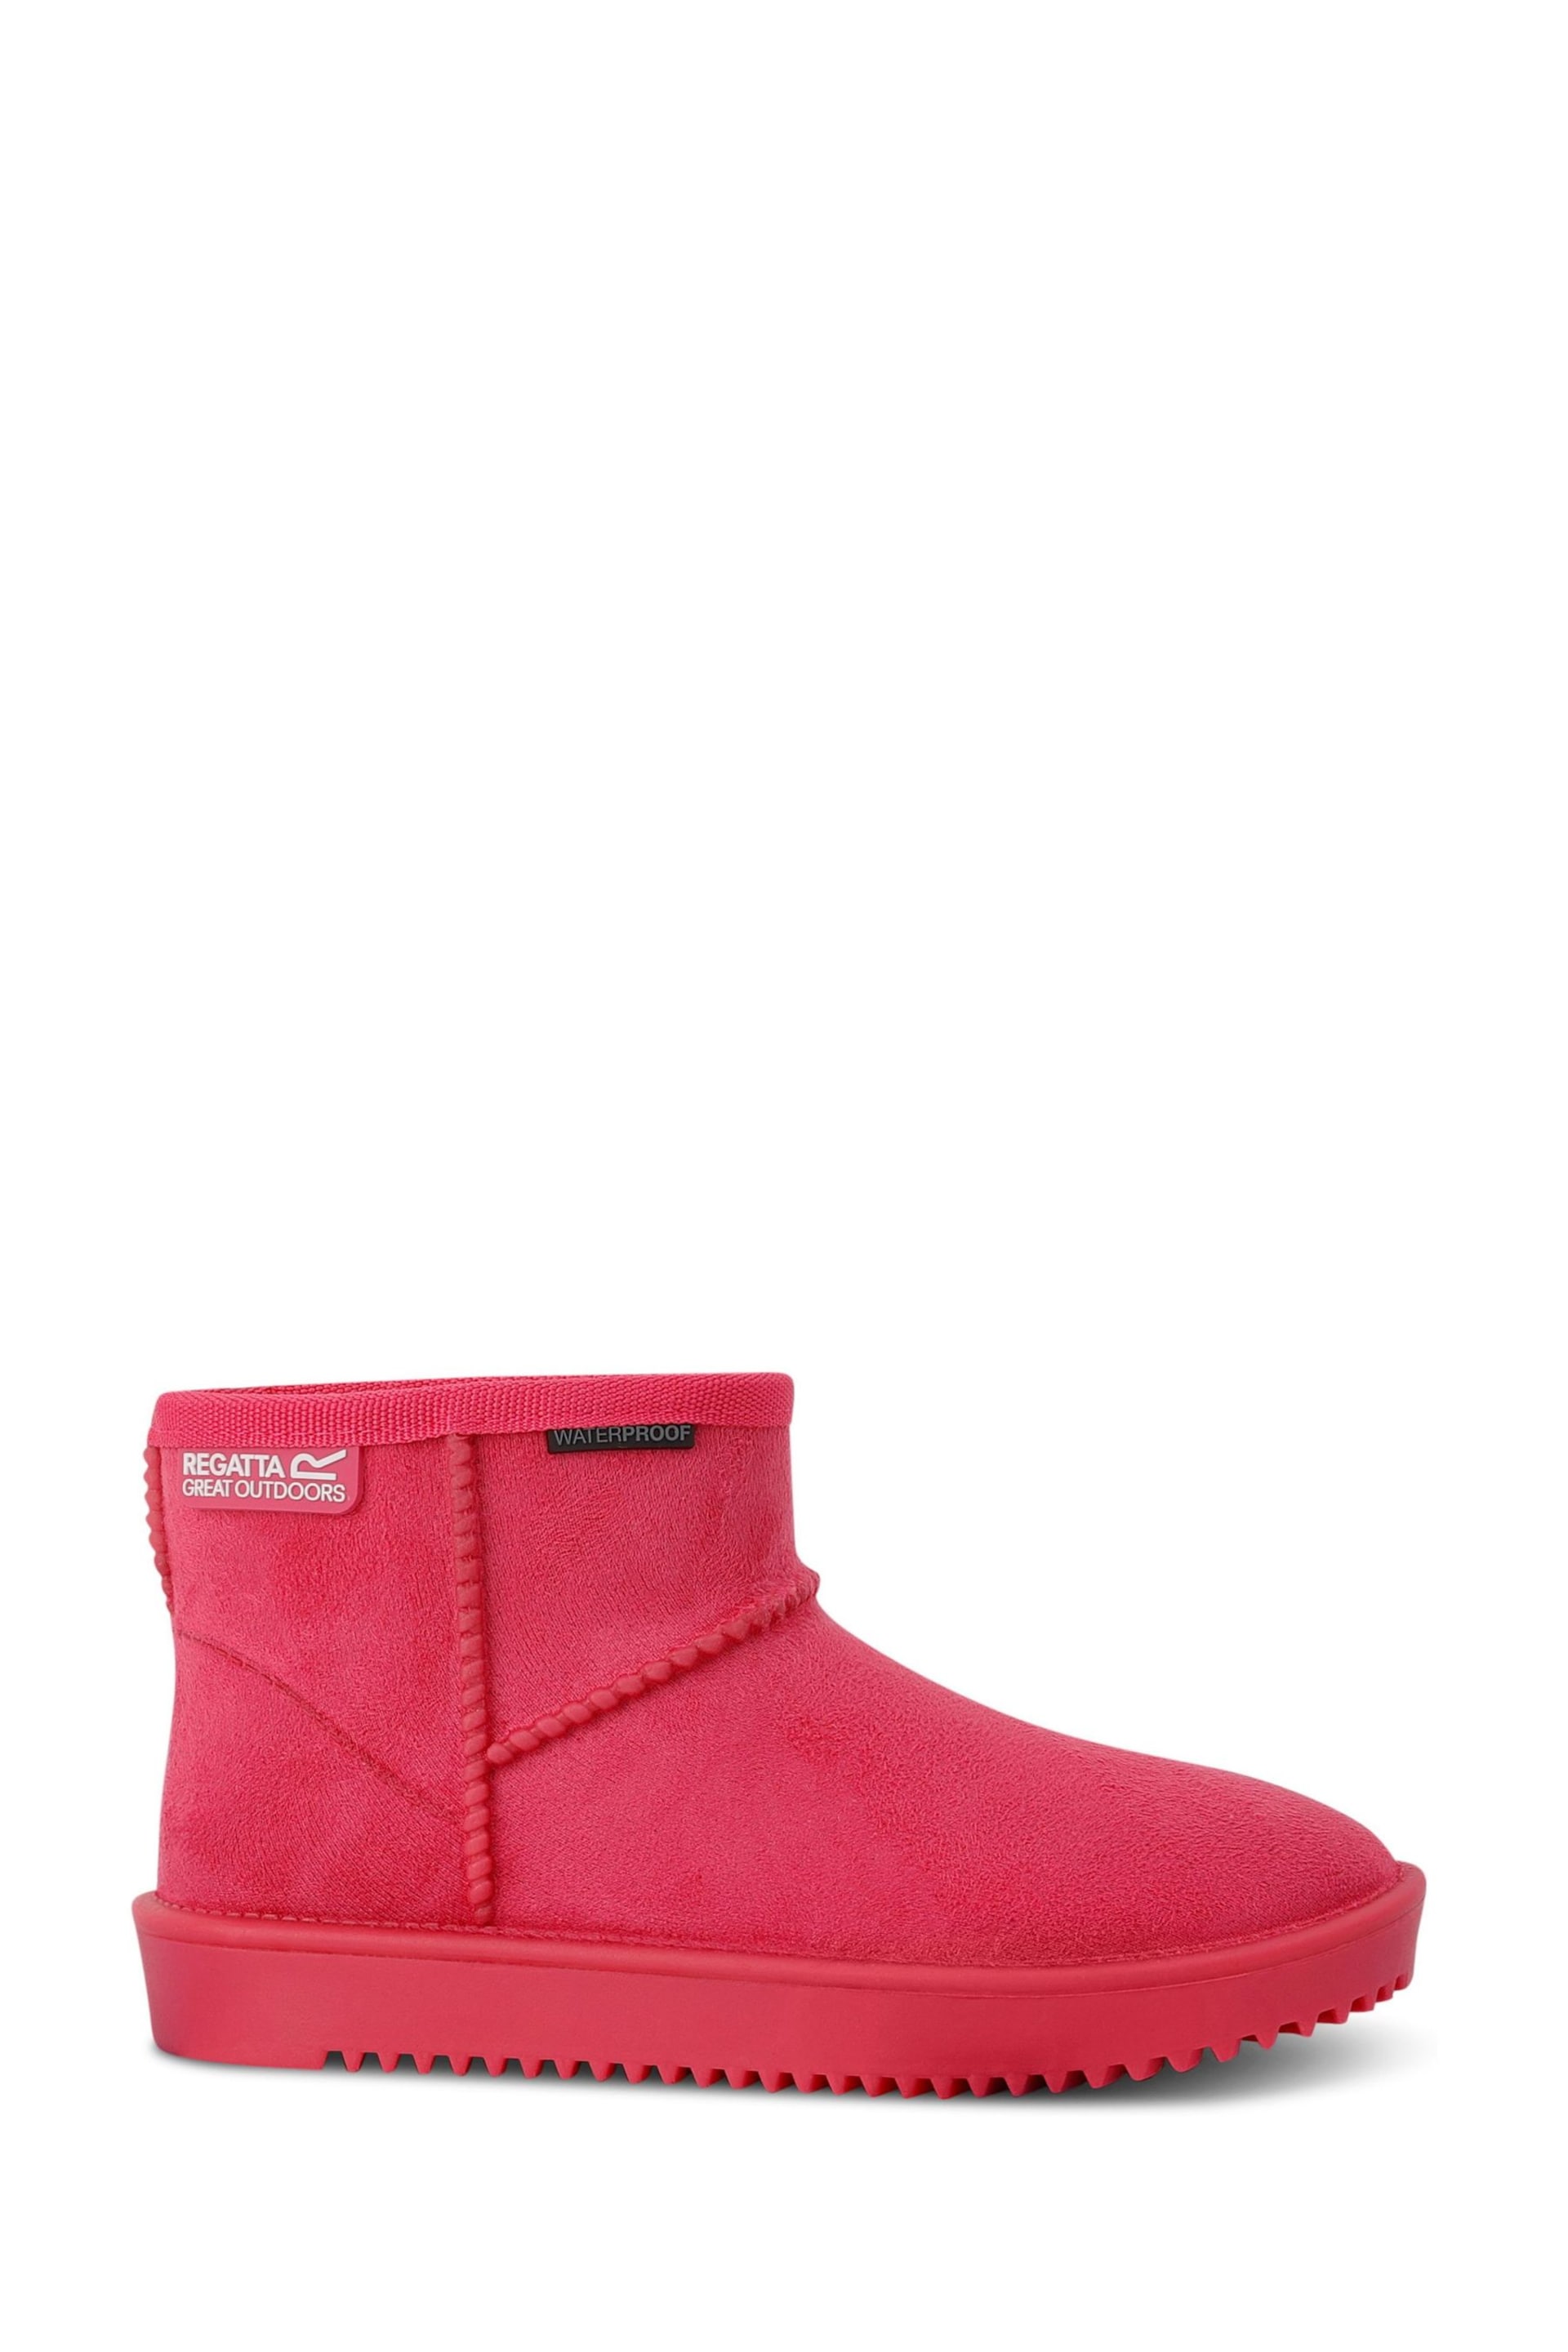 Regatta Pink Girls Risley Waterproof Faux Fur Lined Boots - Image 1 of 6